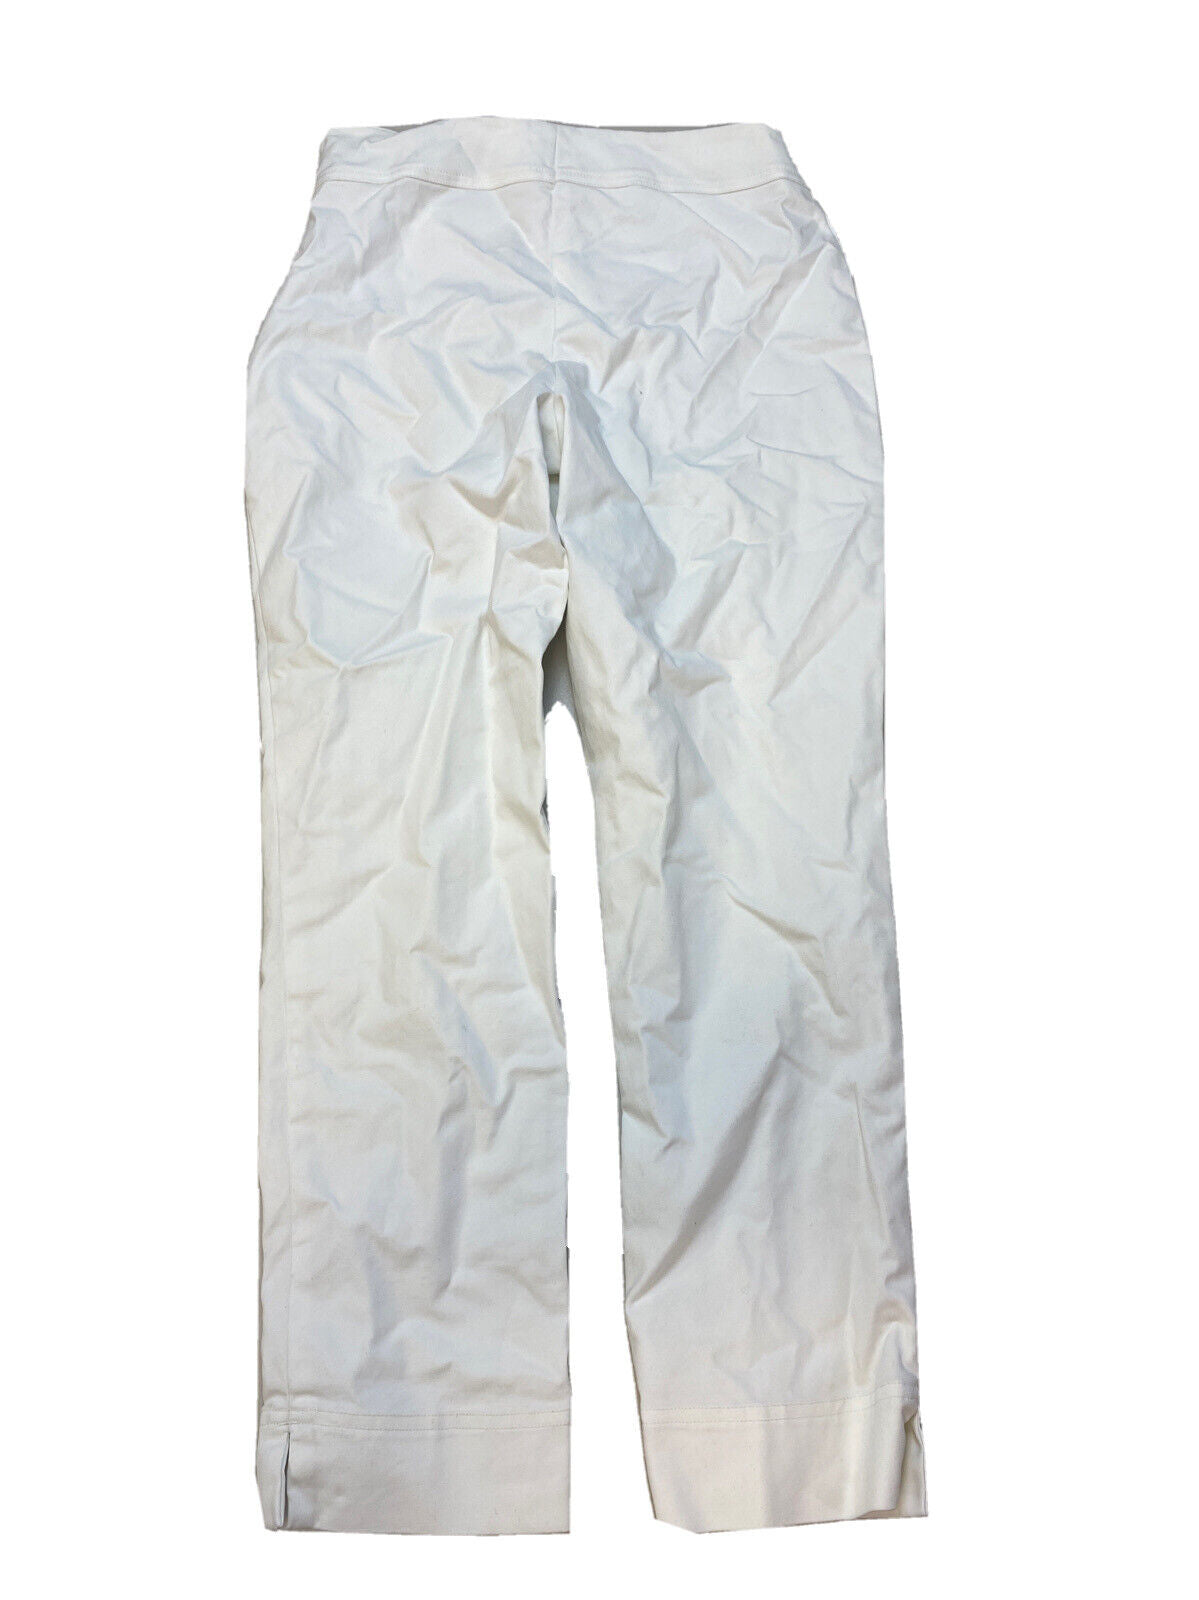 Ellen Tracy Women's White Dress Pants Sz 2